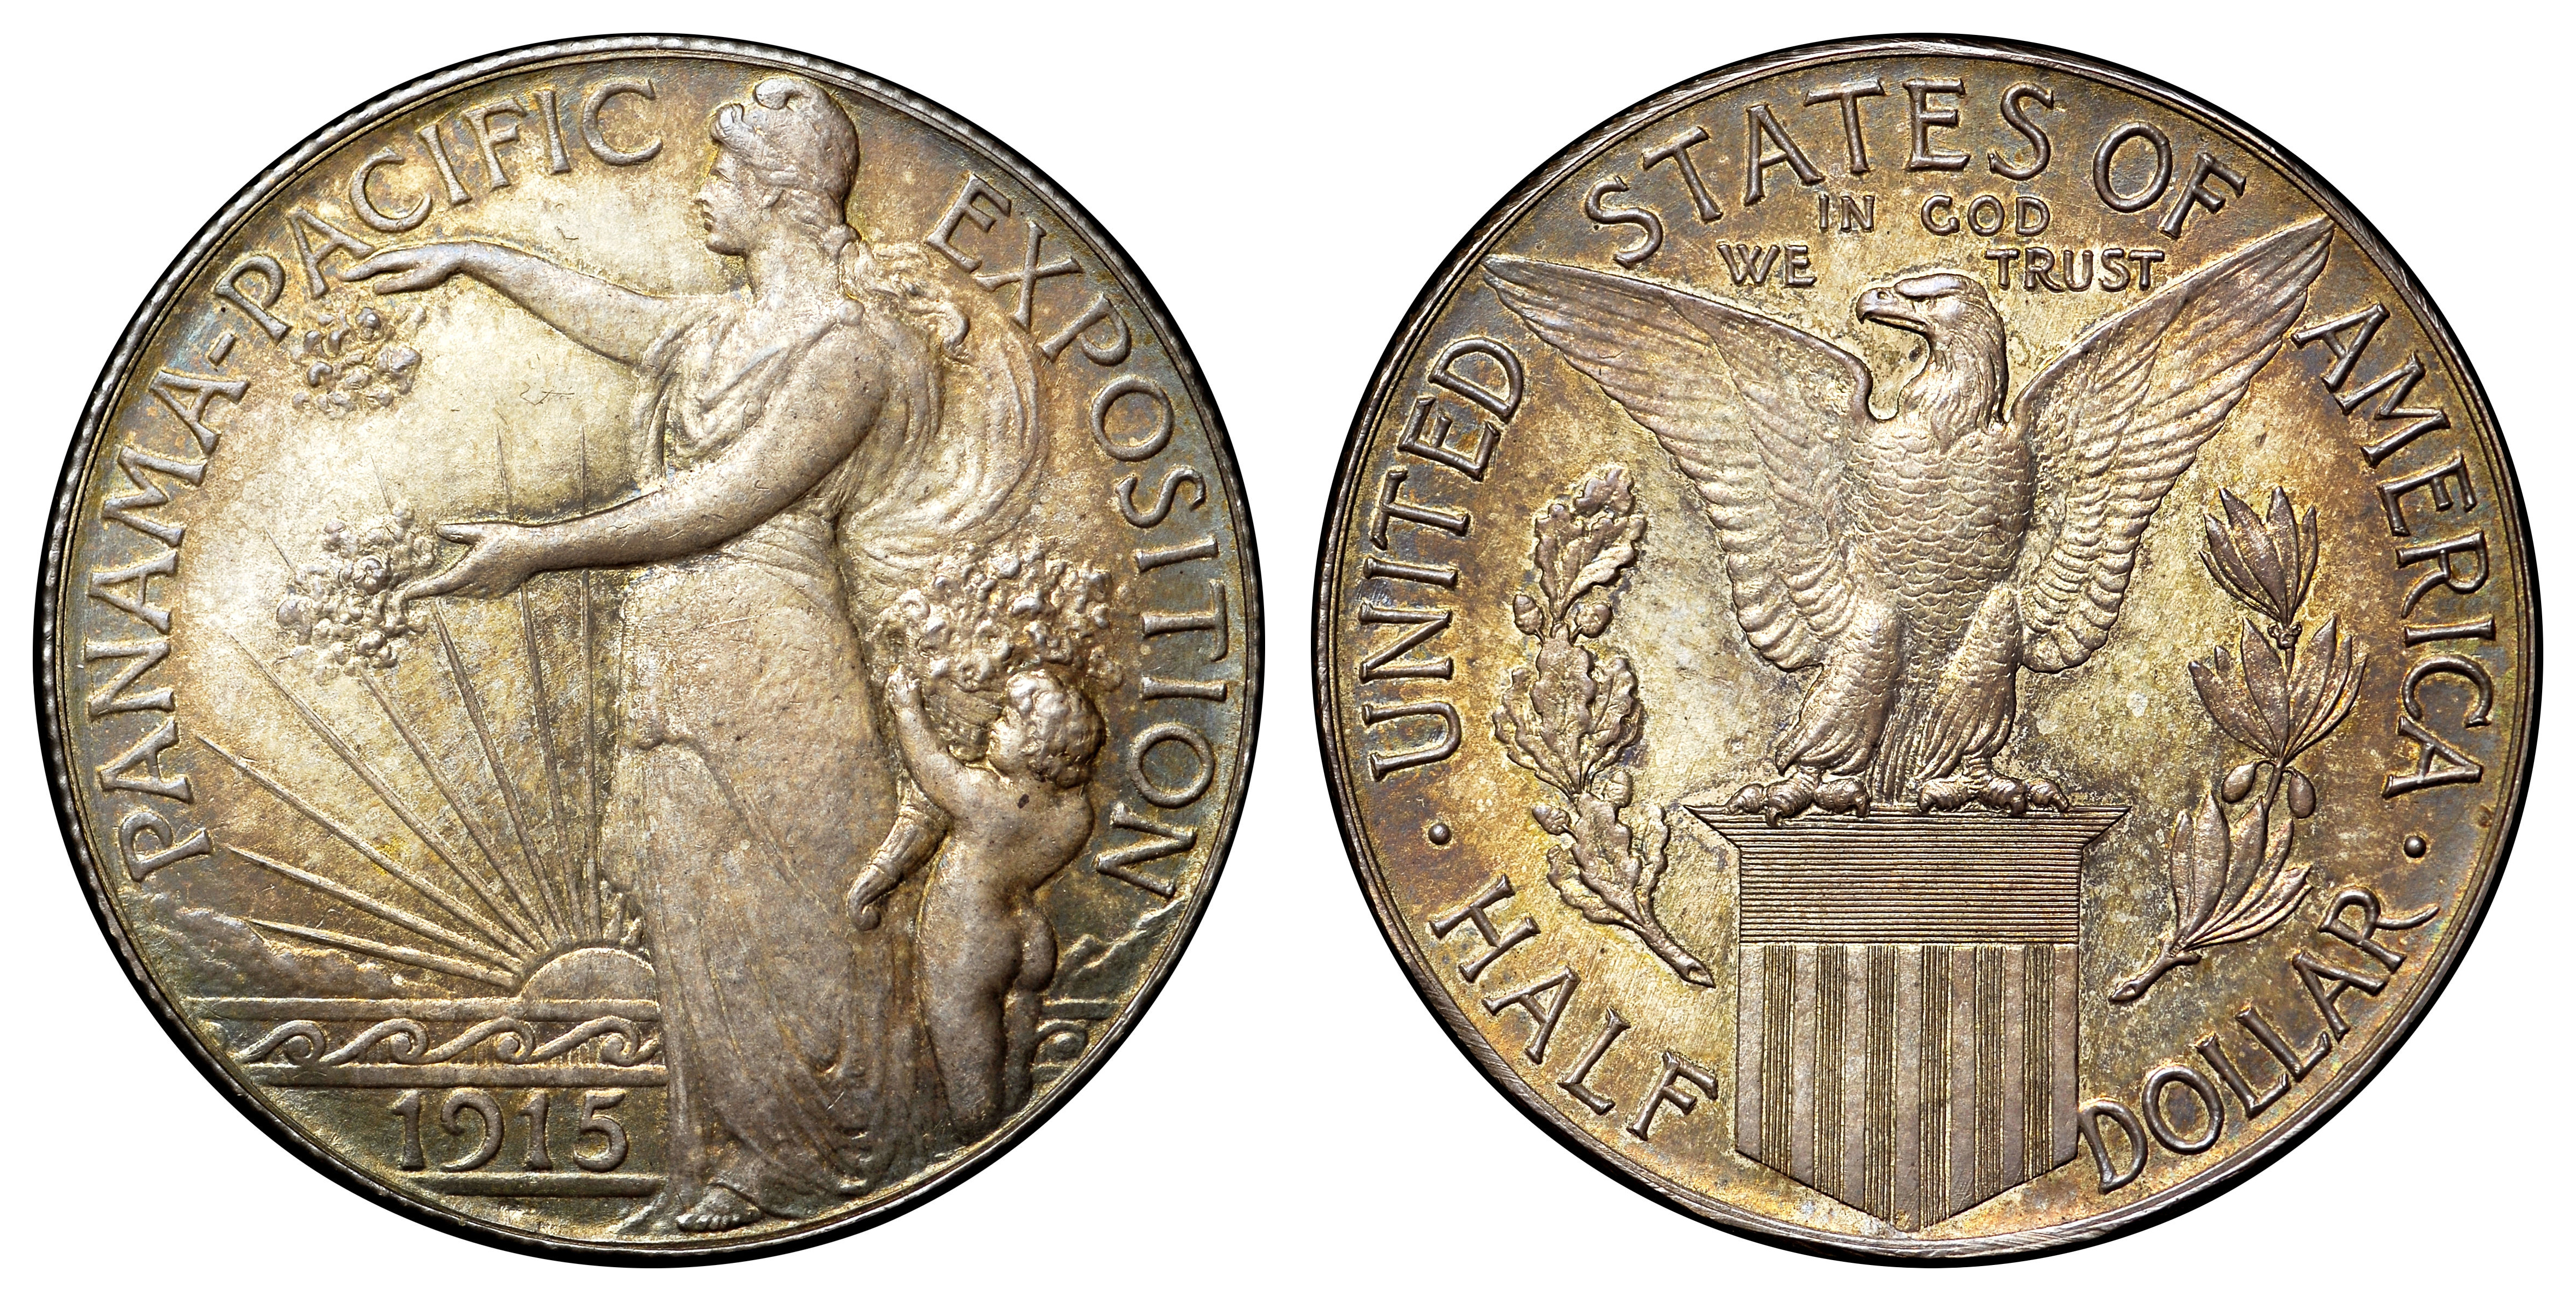 Panama\u2013Pacific commemorative coins - Wikipedia, the free encyclopedia